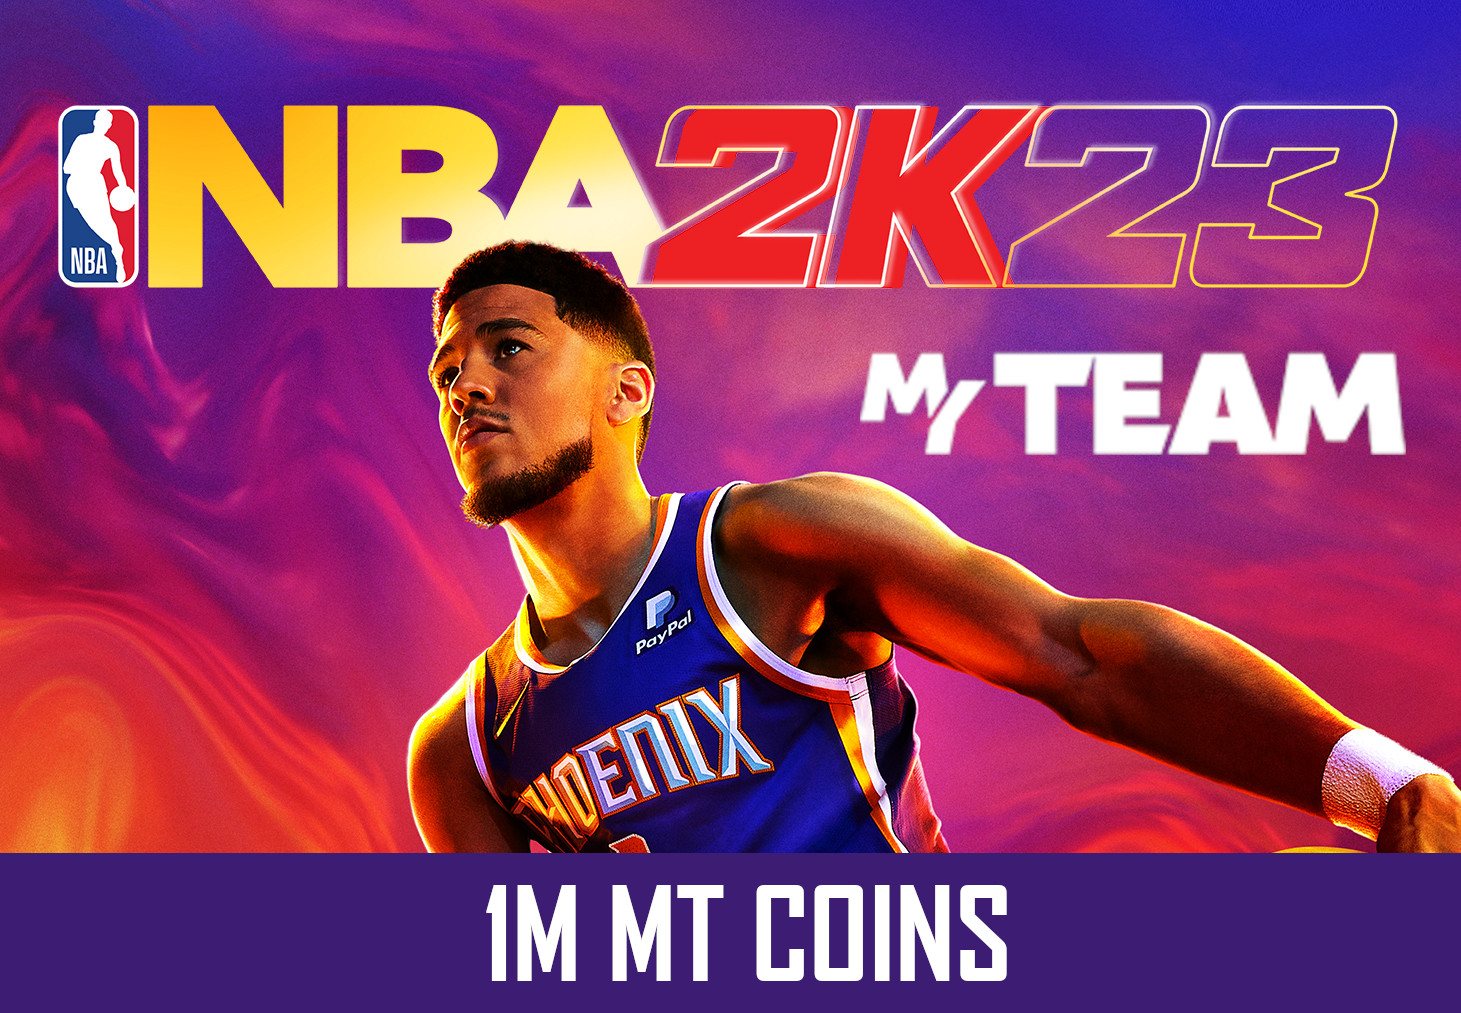 NBA 2K23 - 1M MT Coins - GLOBAL XBOX One/Series X,S